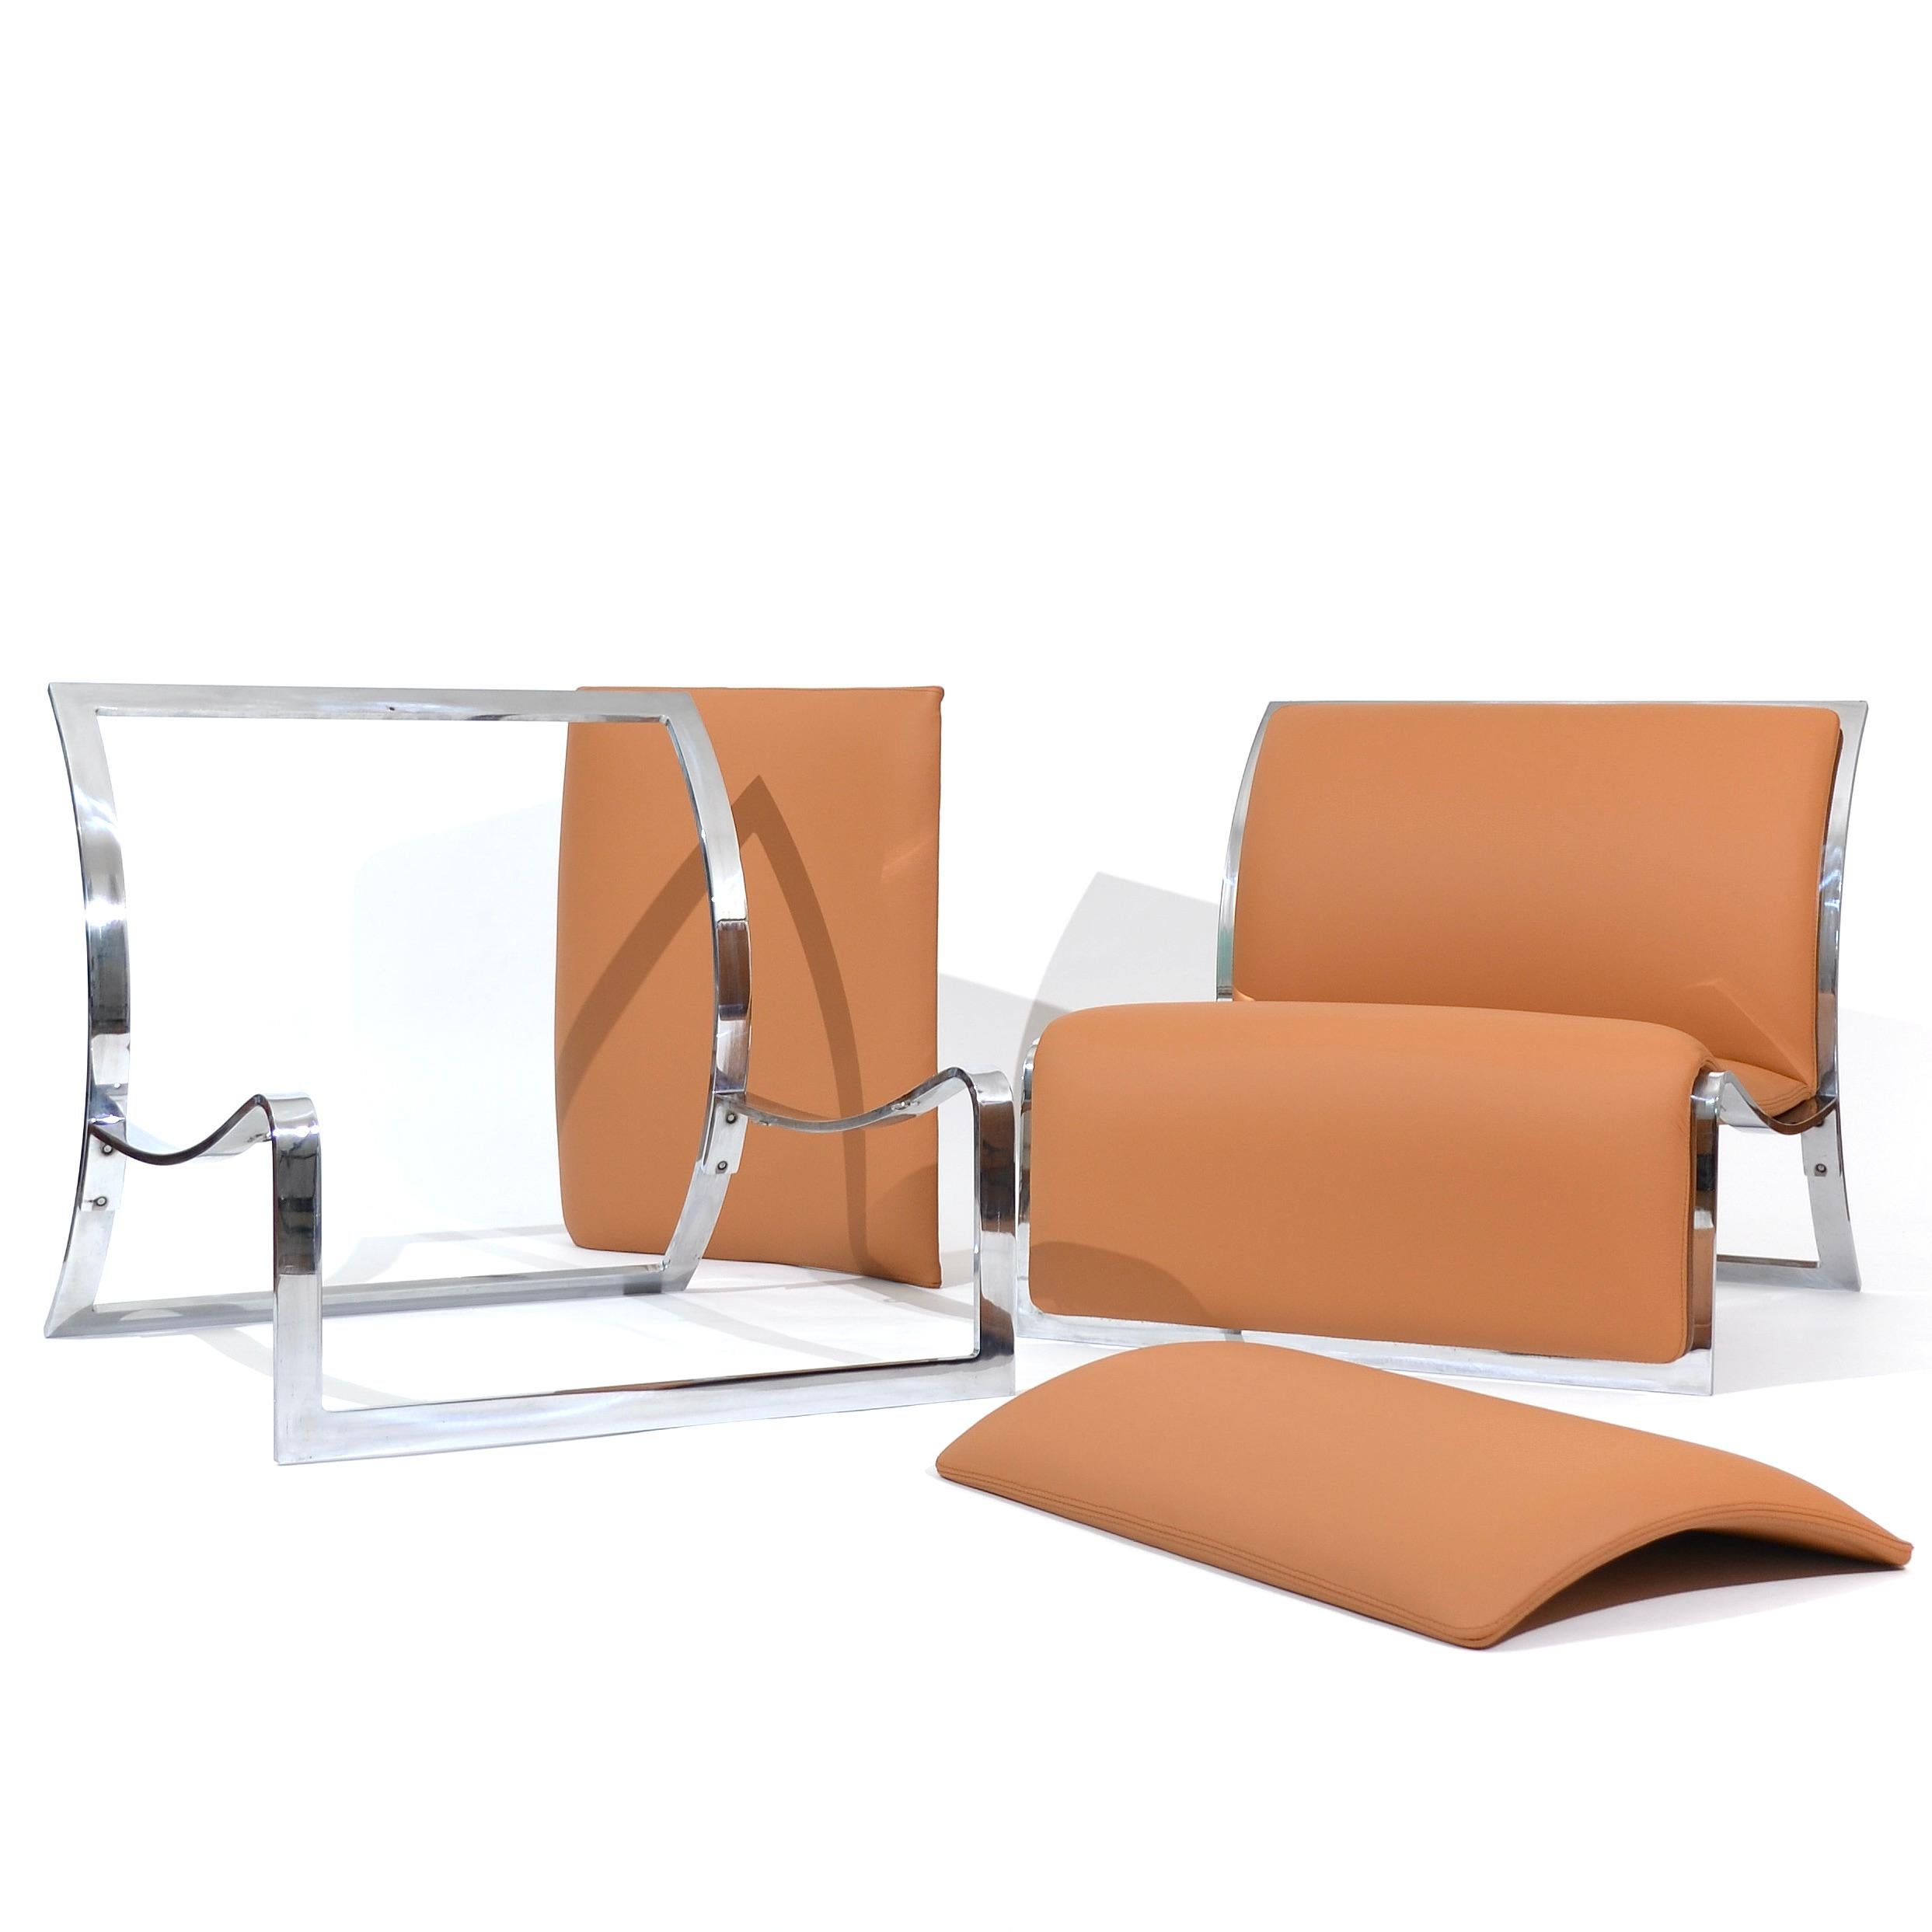 Saporiti leather lounge chairs, Vittorio Introini, Italy, 1965 For Sale 10